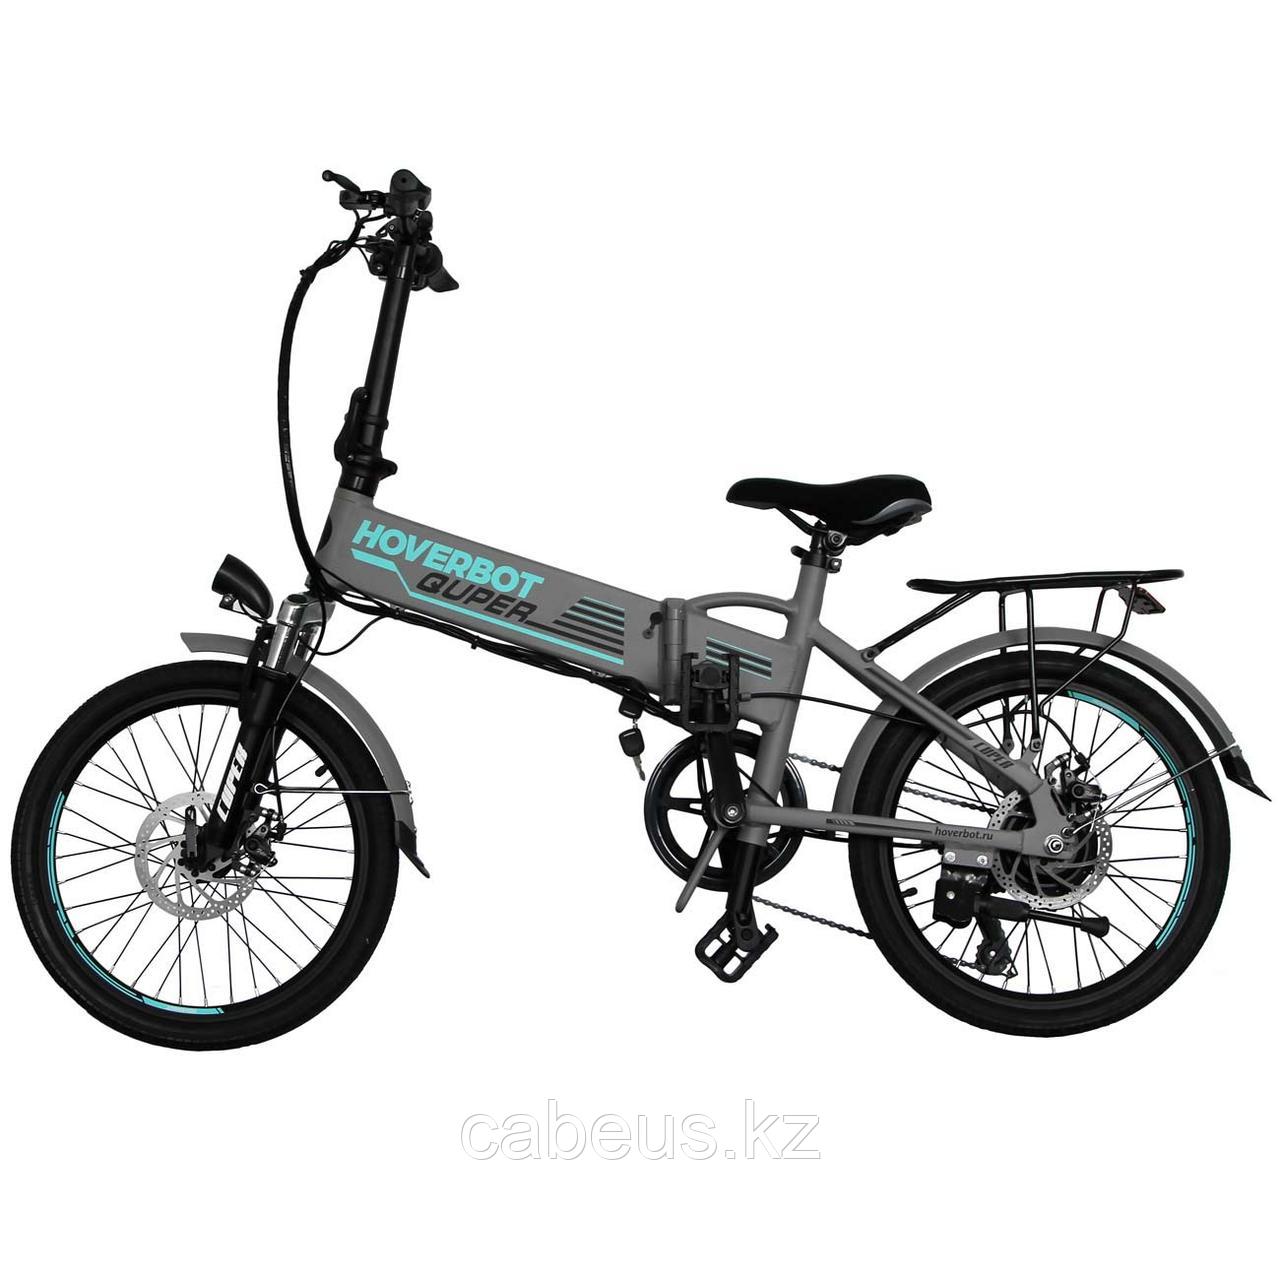 Электрический велосипед Hoverbot CB-8 Quper (2019) Greу